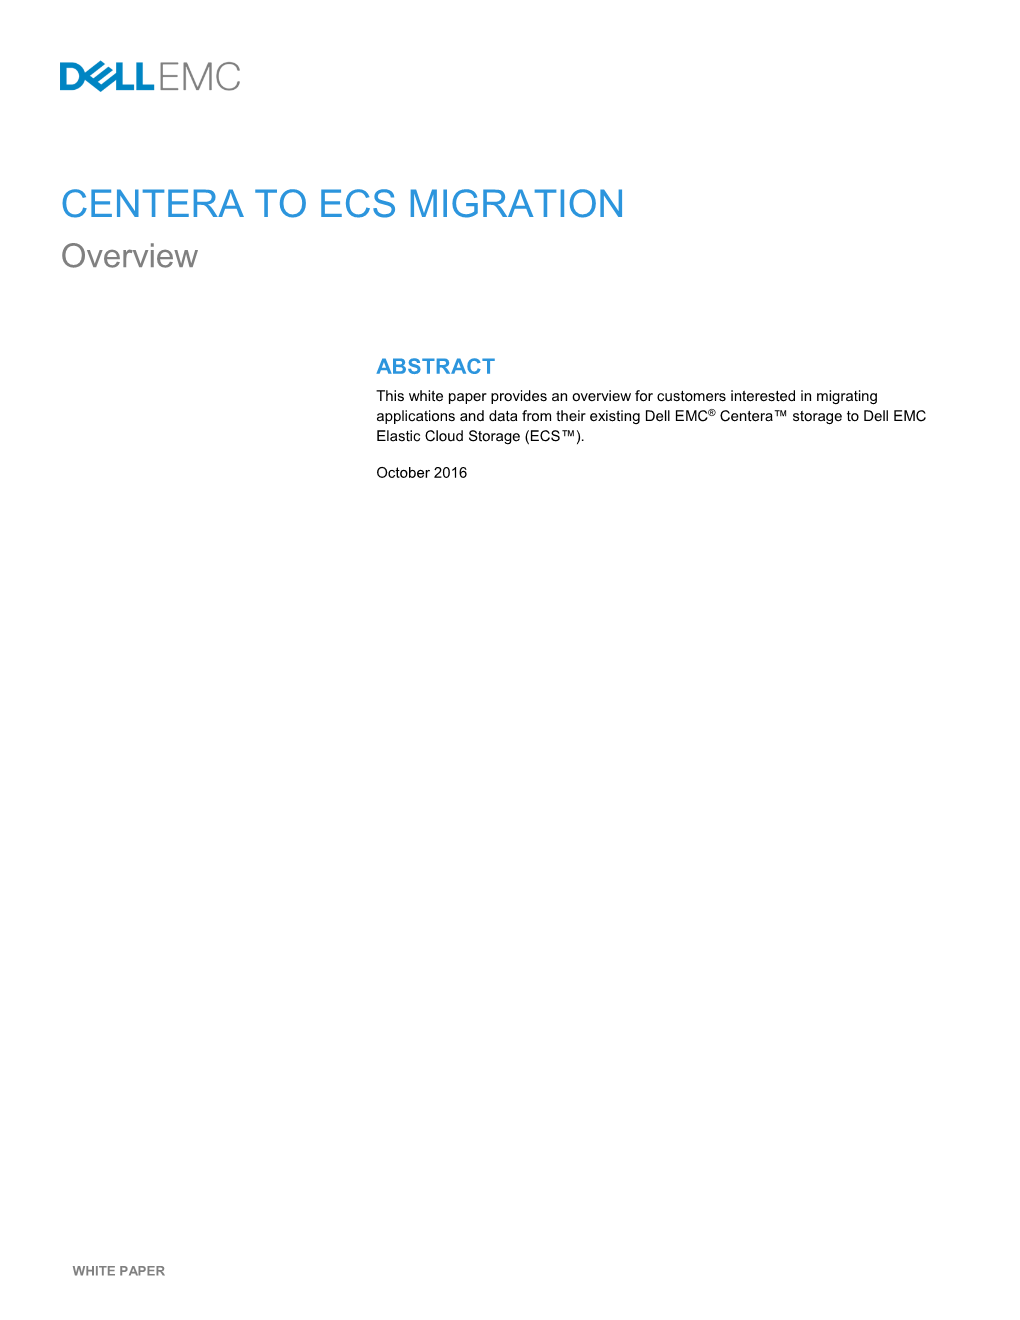 CENTERA to ECS MIGRATION Overview